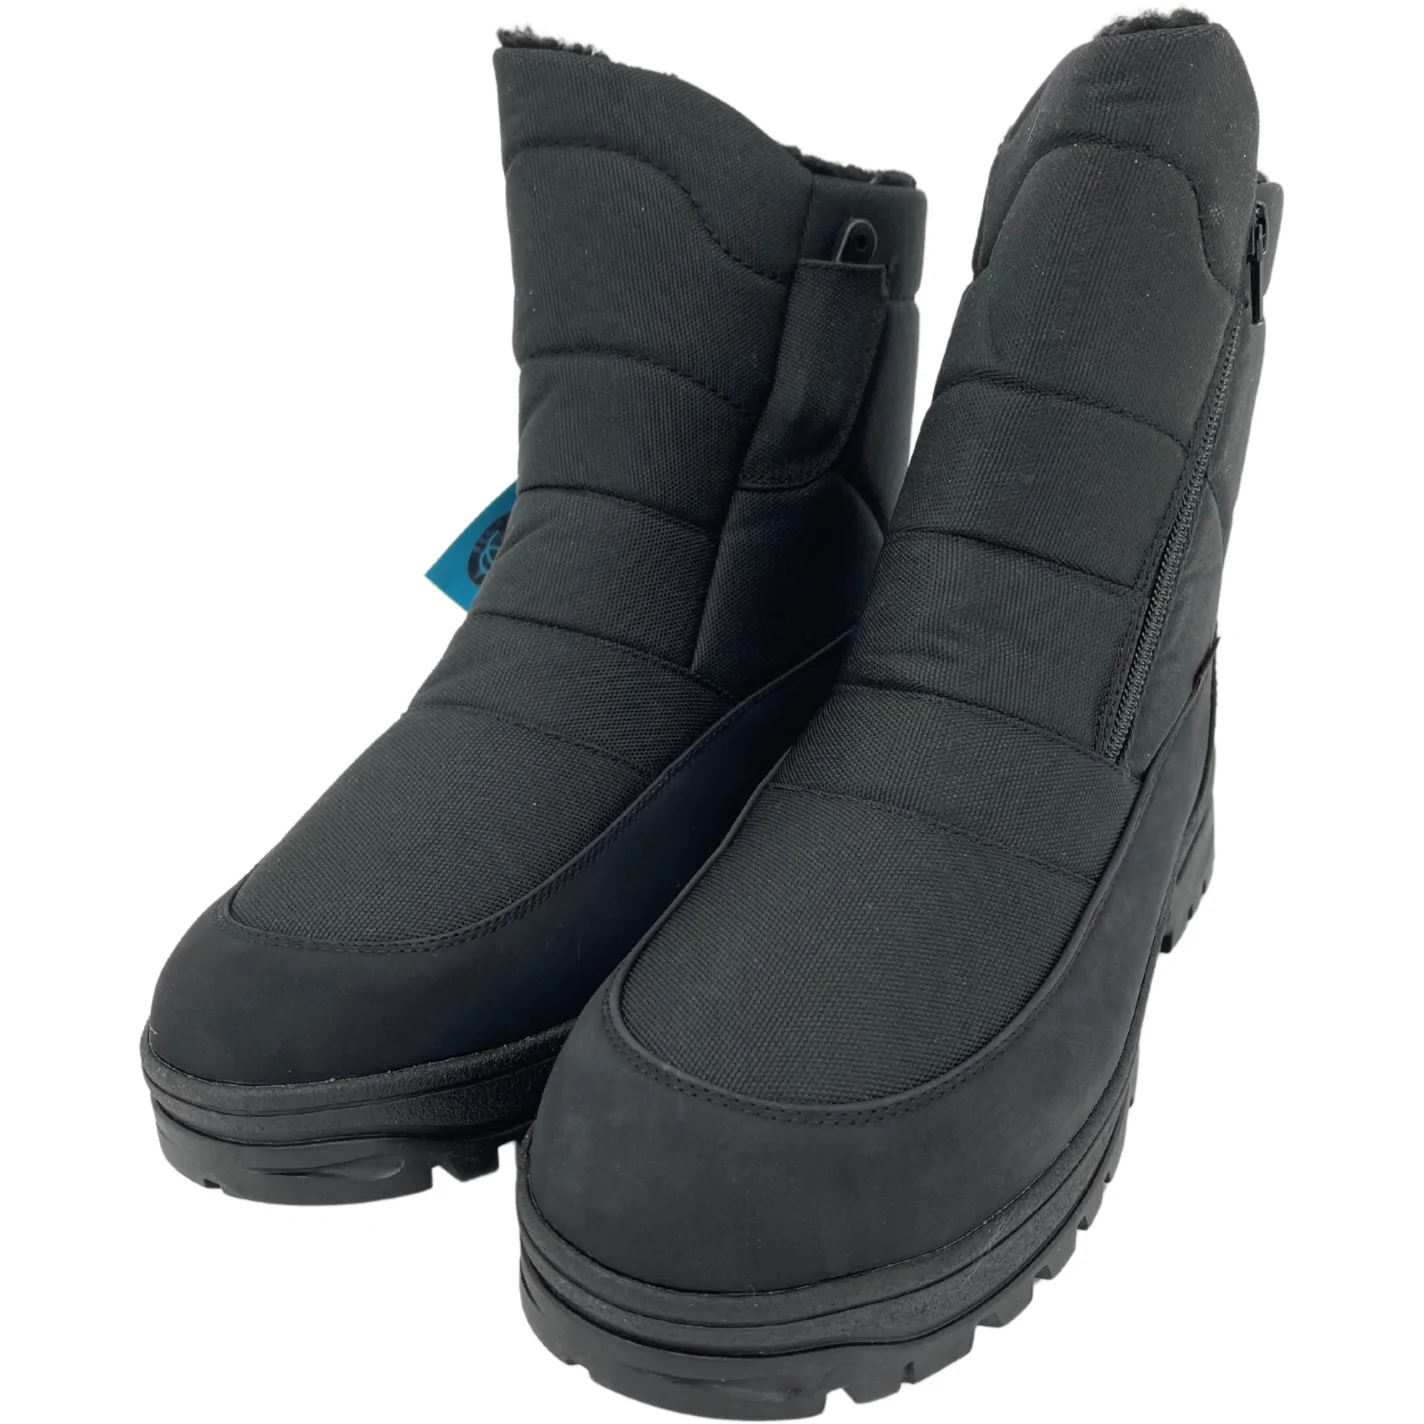 Pro-Tec Men's Winter Boots / Side Zipper Tipper / Built-In Ice Grippers / Black / Size 43